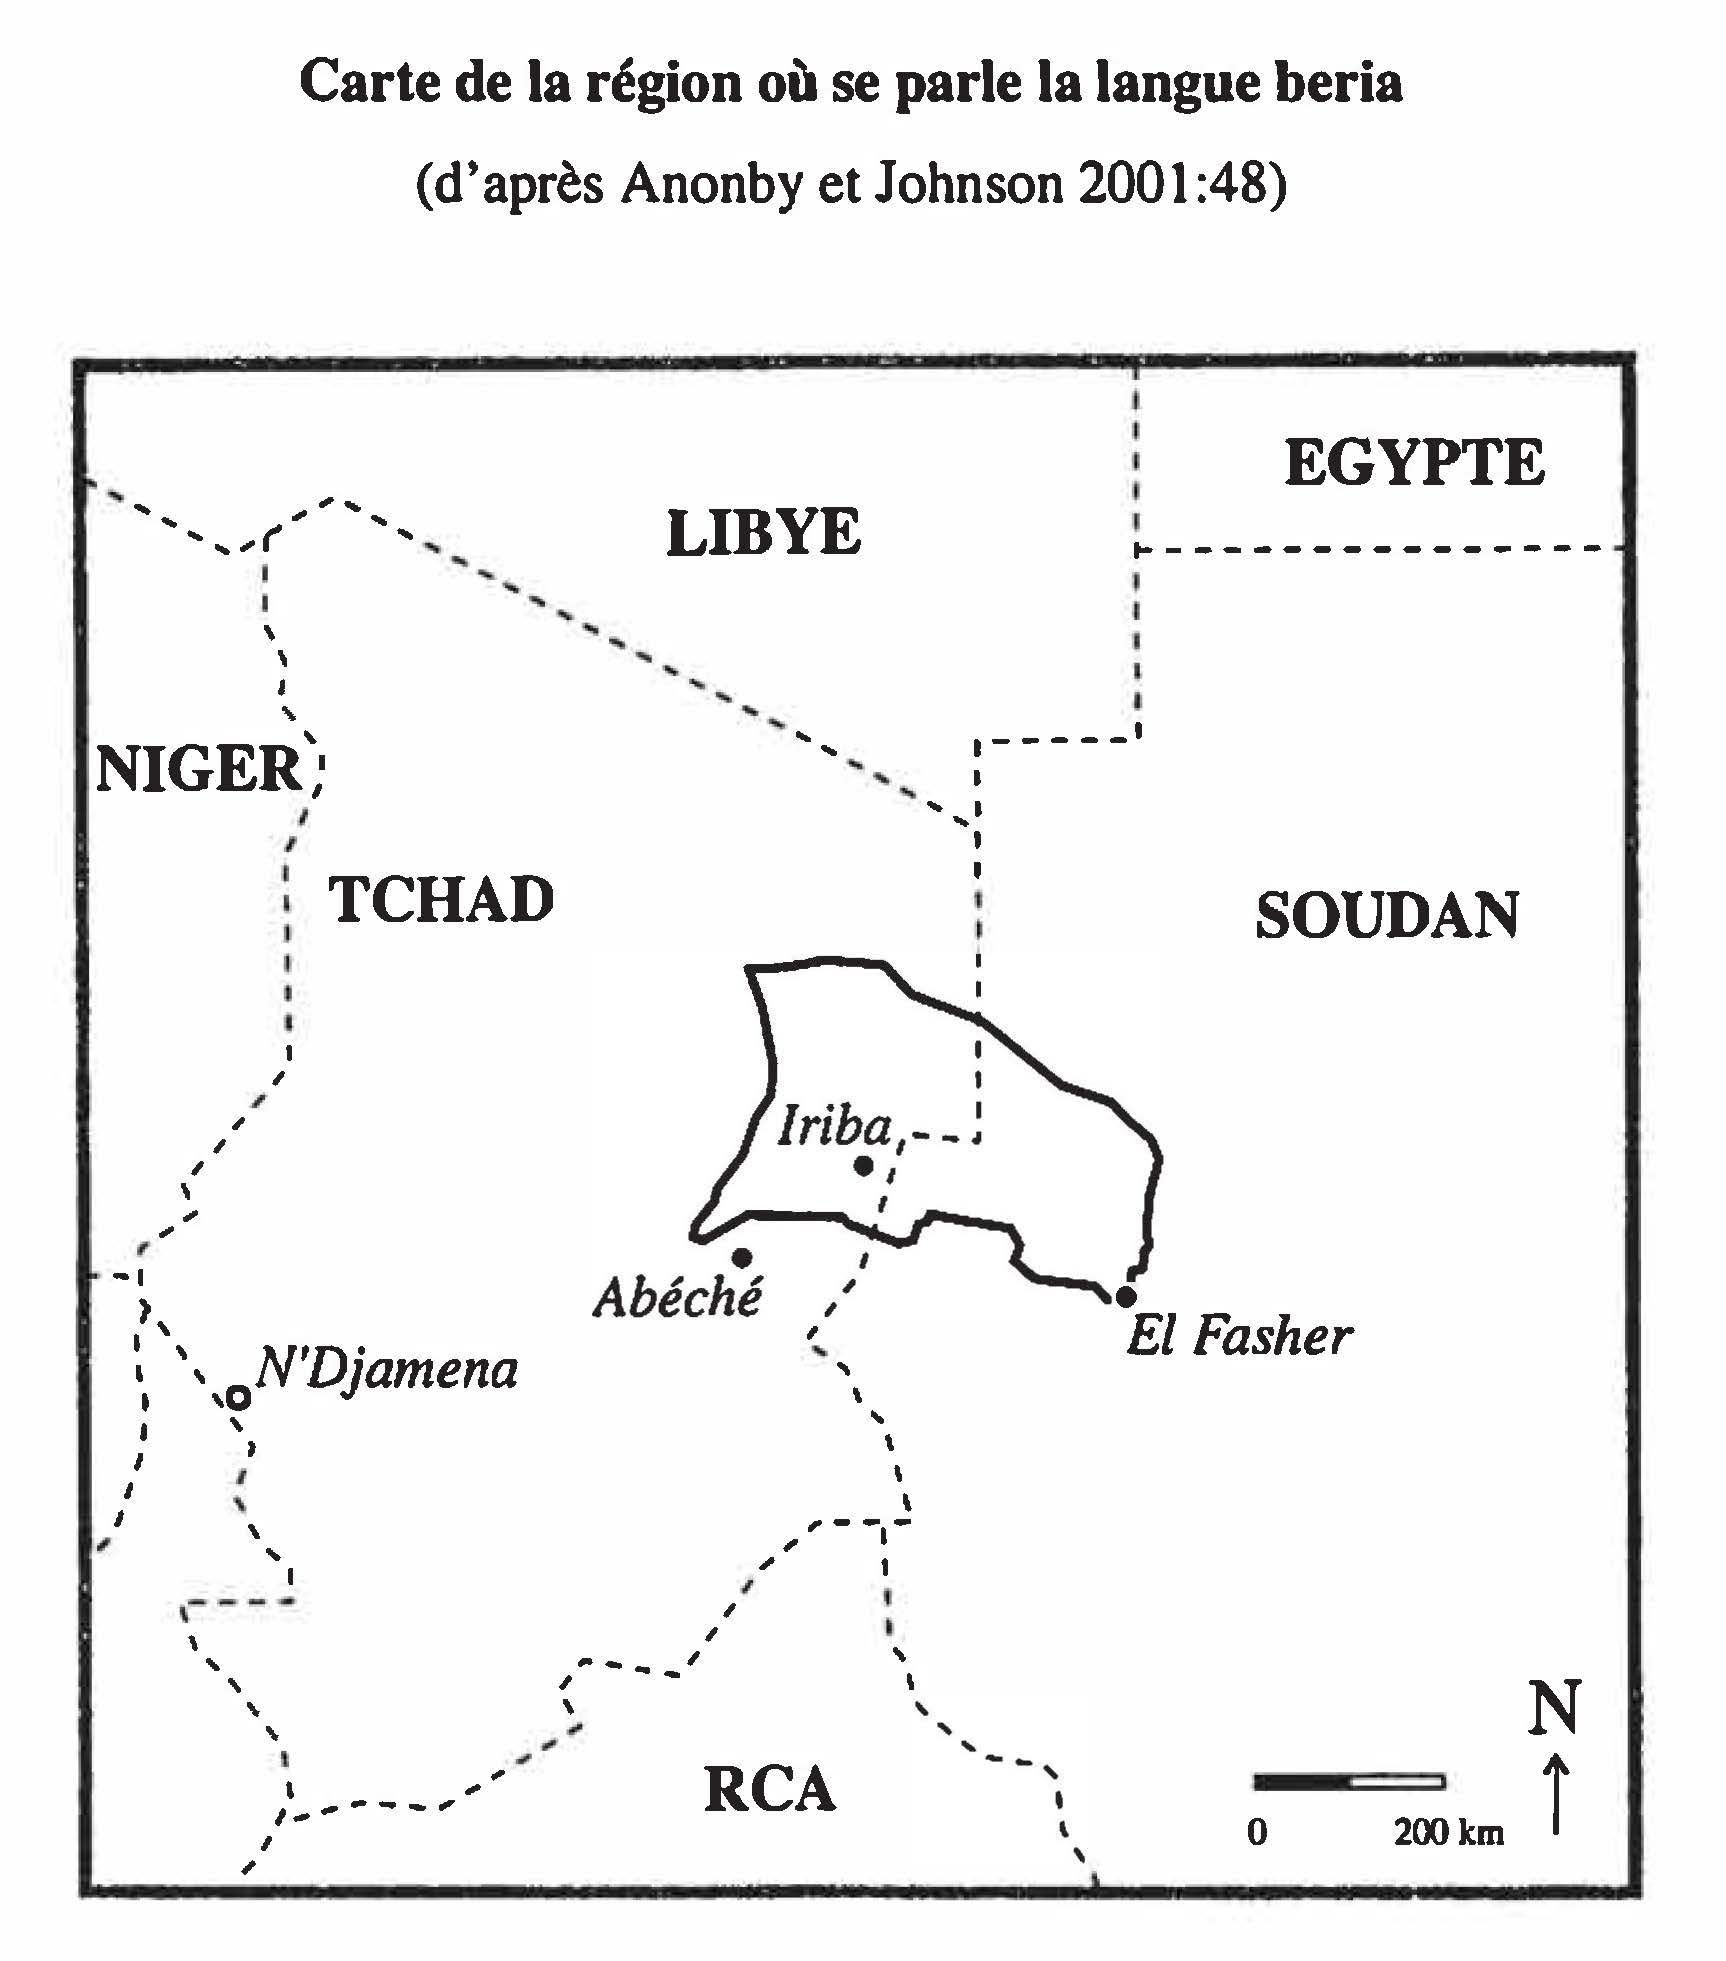 Grammaire du beria (langue saharienne)